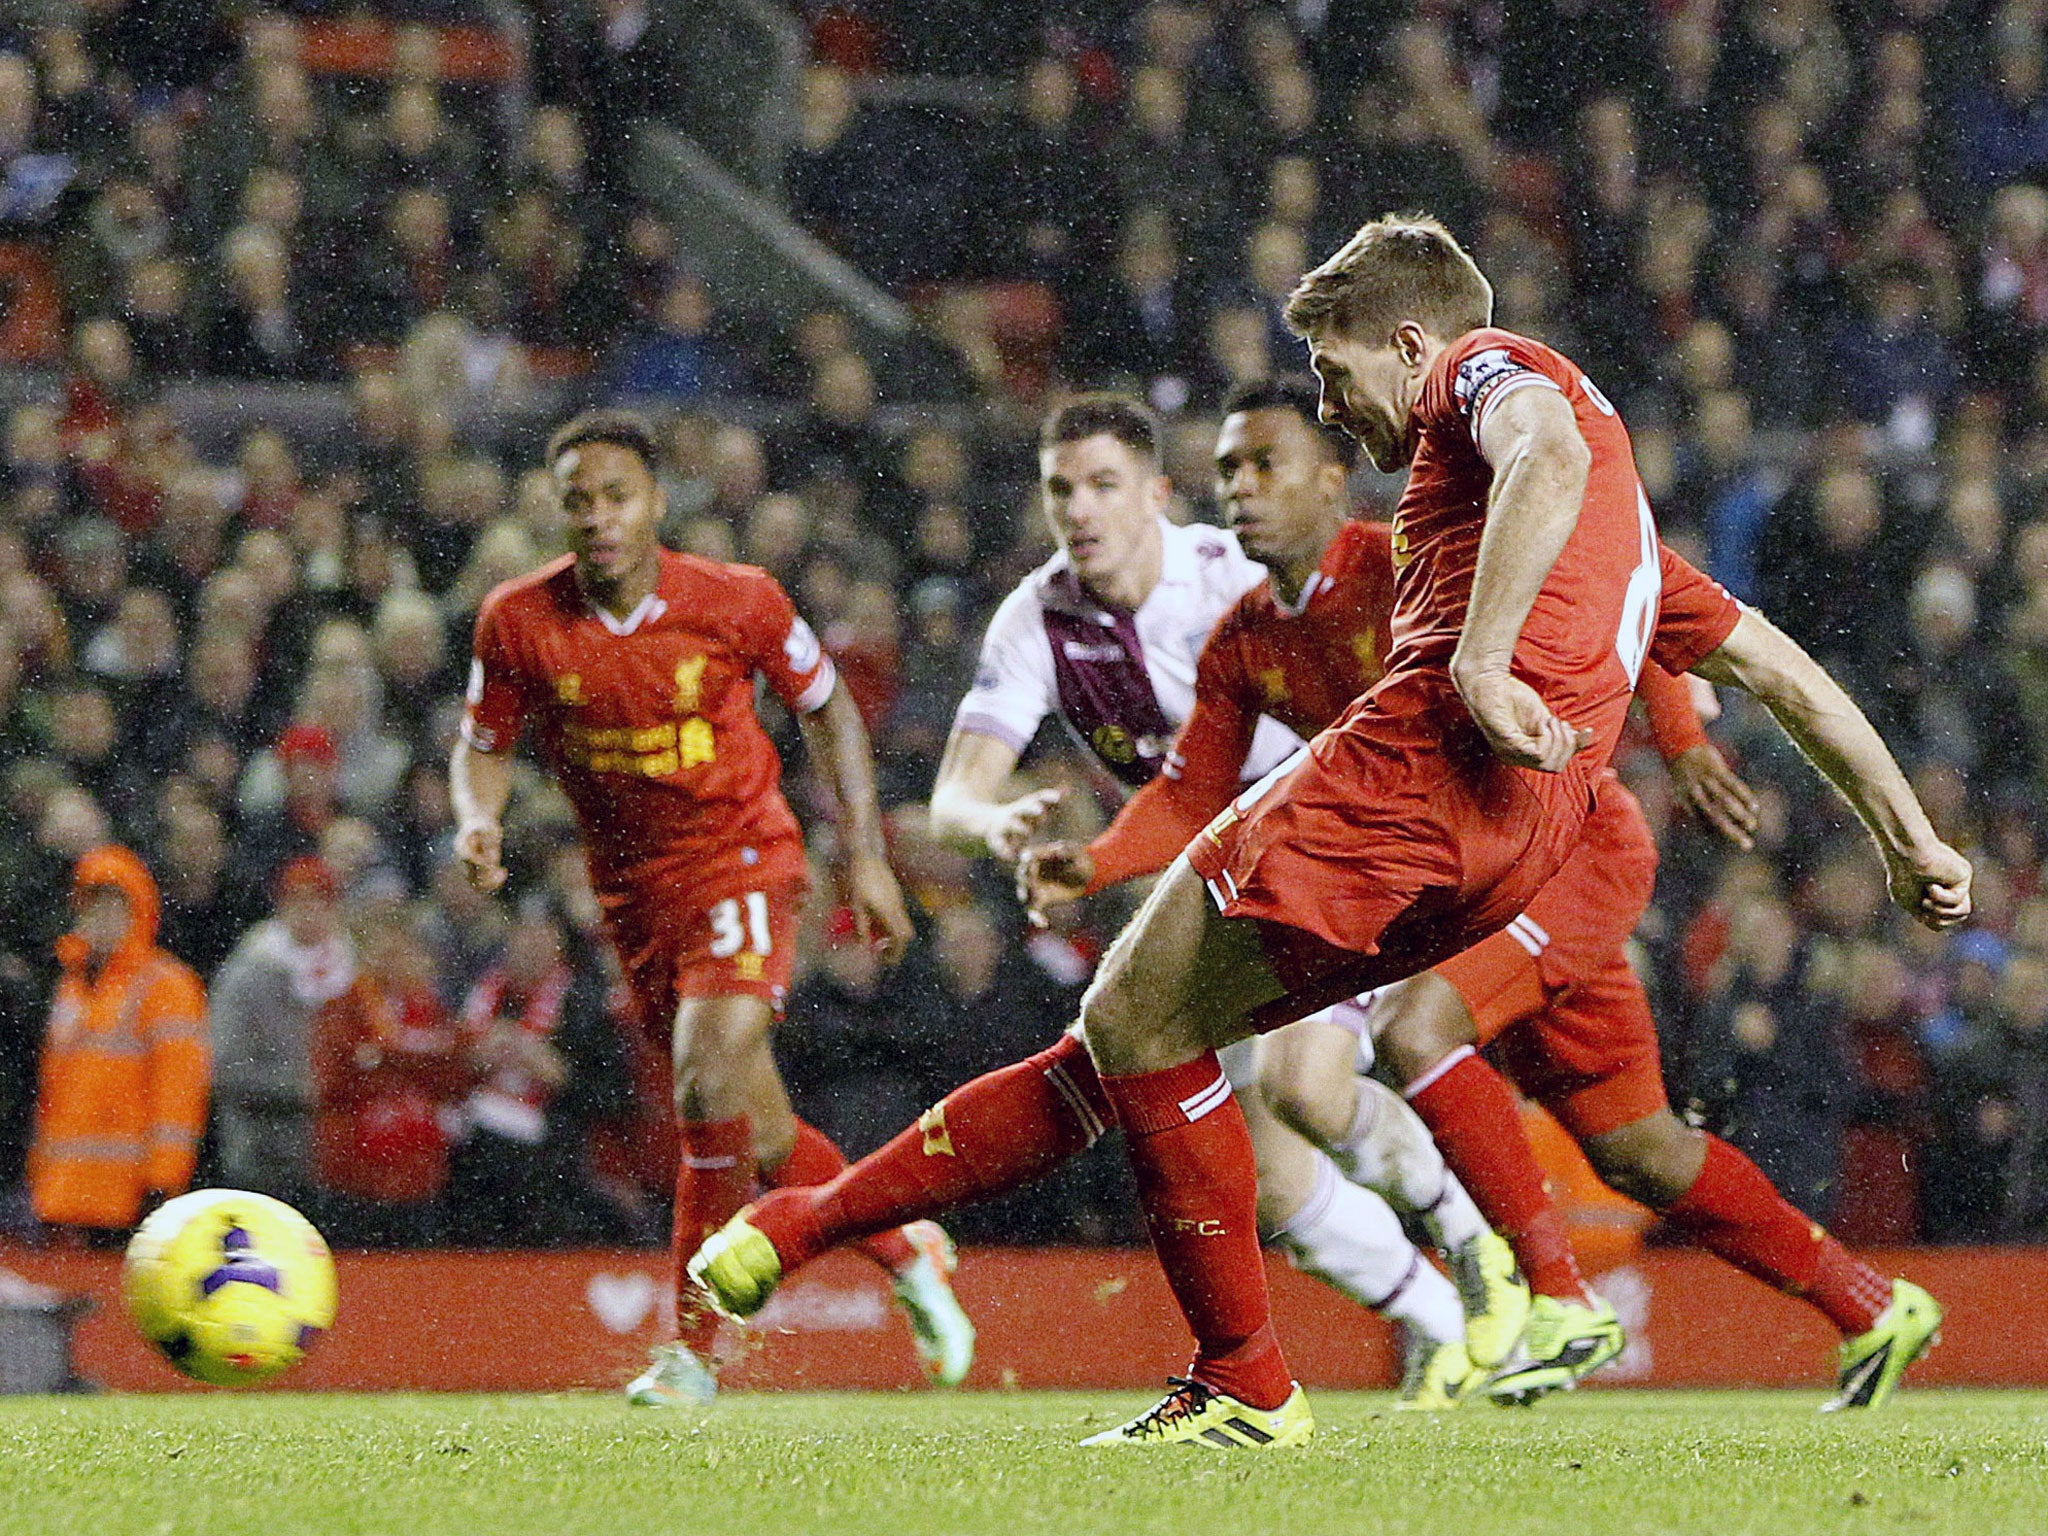 Steven Gerrard scores from the penalty spot against Villa